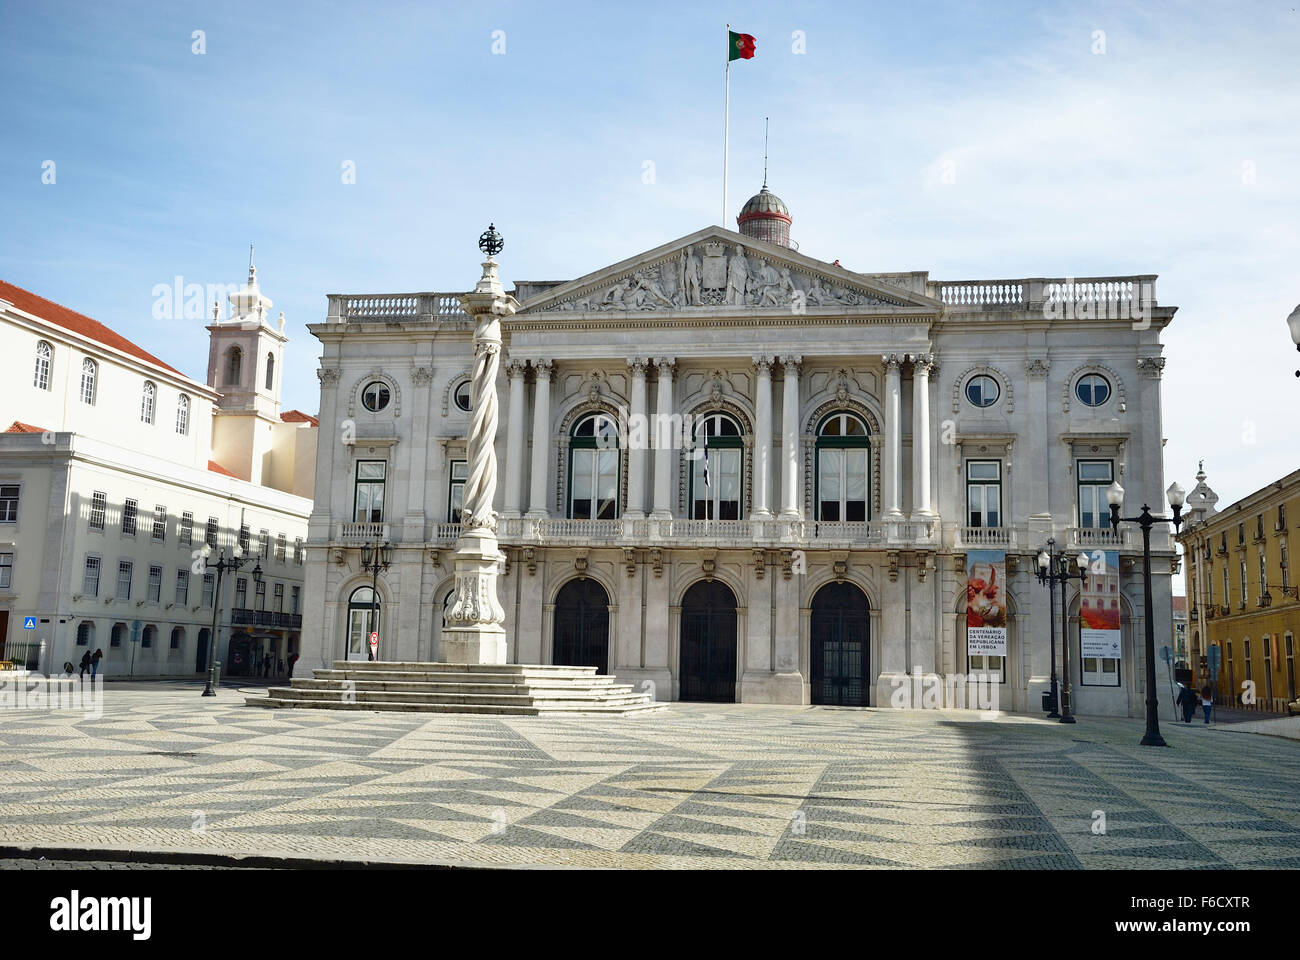 Praça Município - Rathausplatz - Lissabon, Portugal. Europa Stockfoto